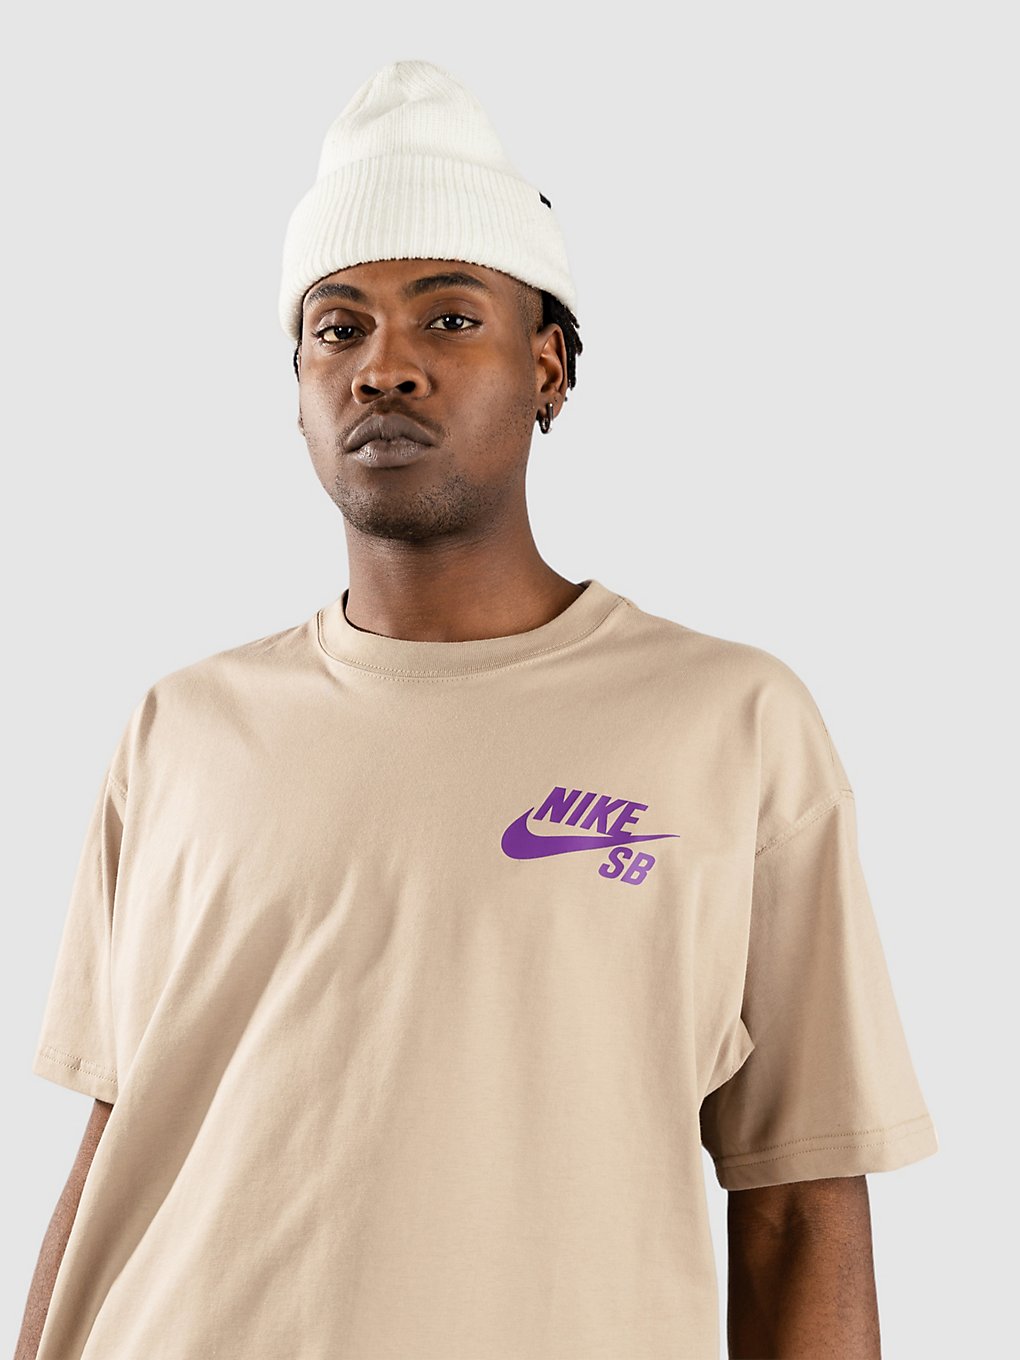 Nike Sb Logo T-Shirt khaki kaufen